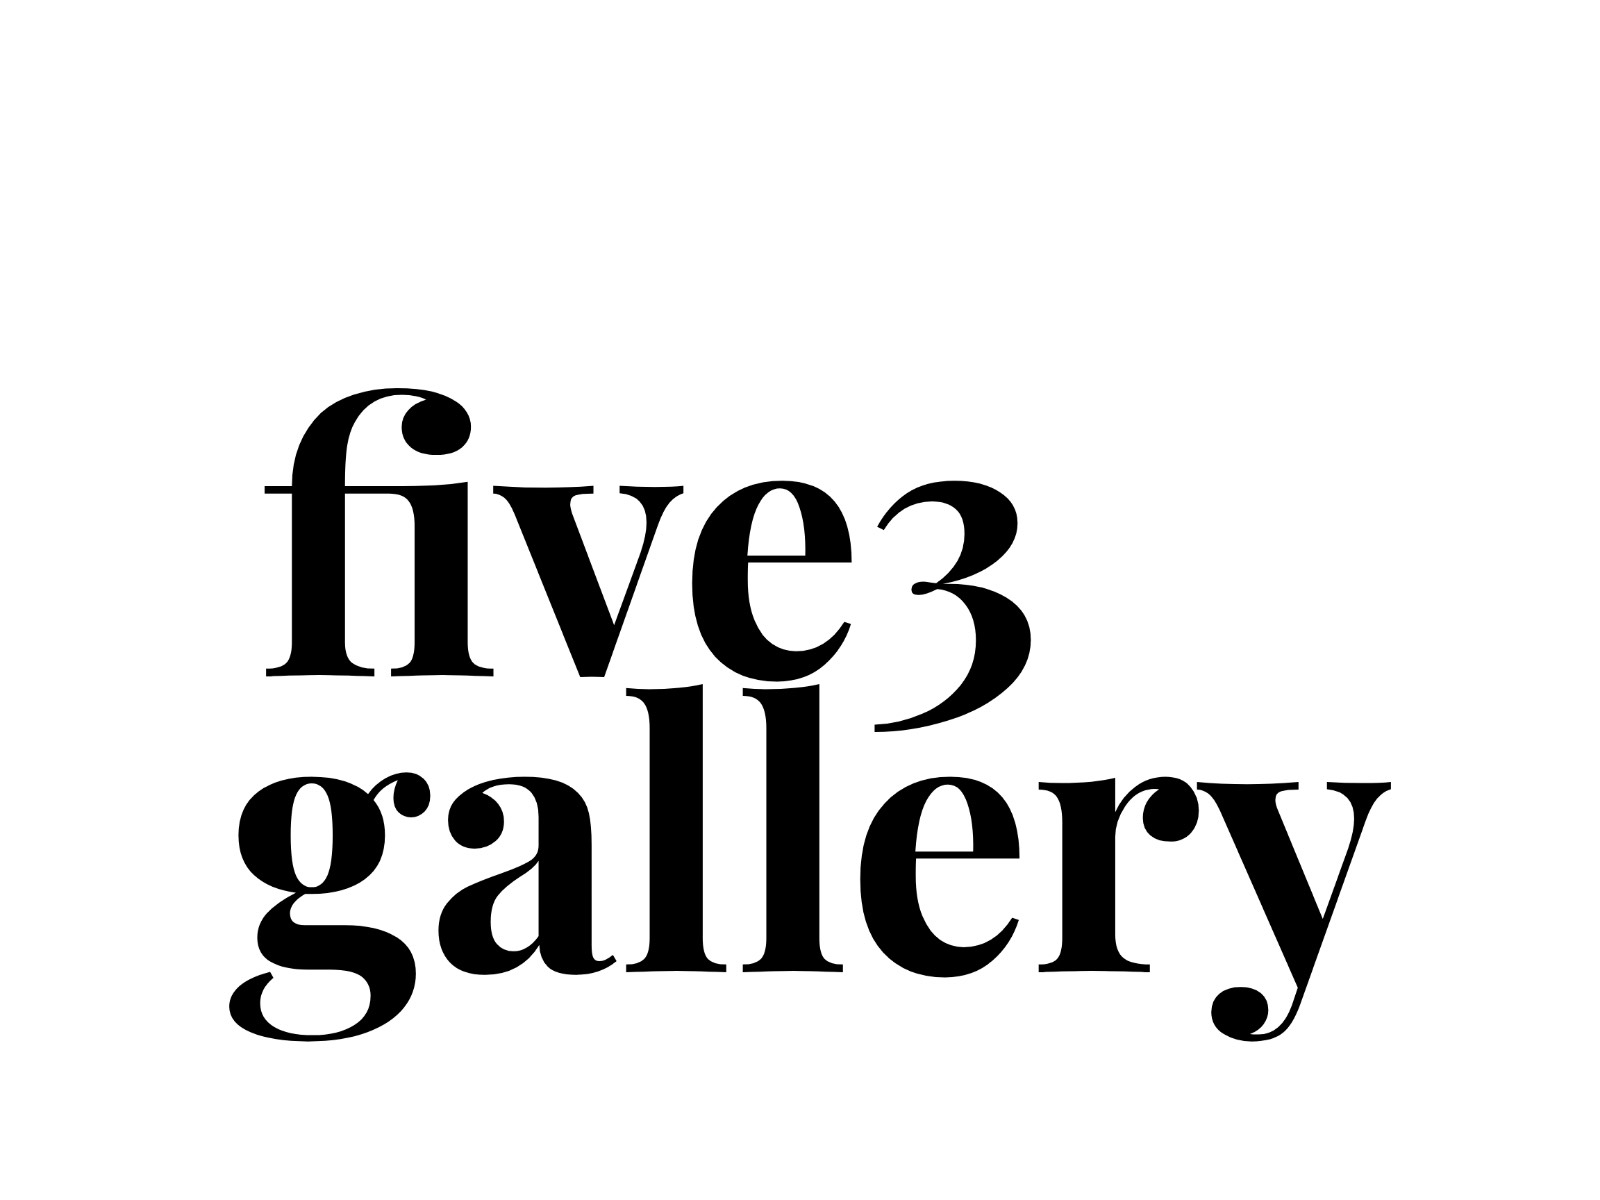 Five3 Gallery